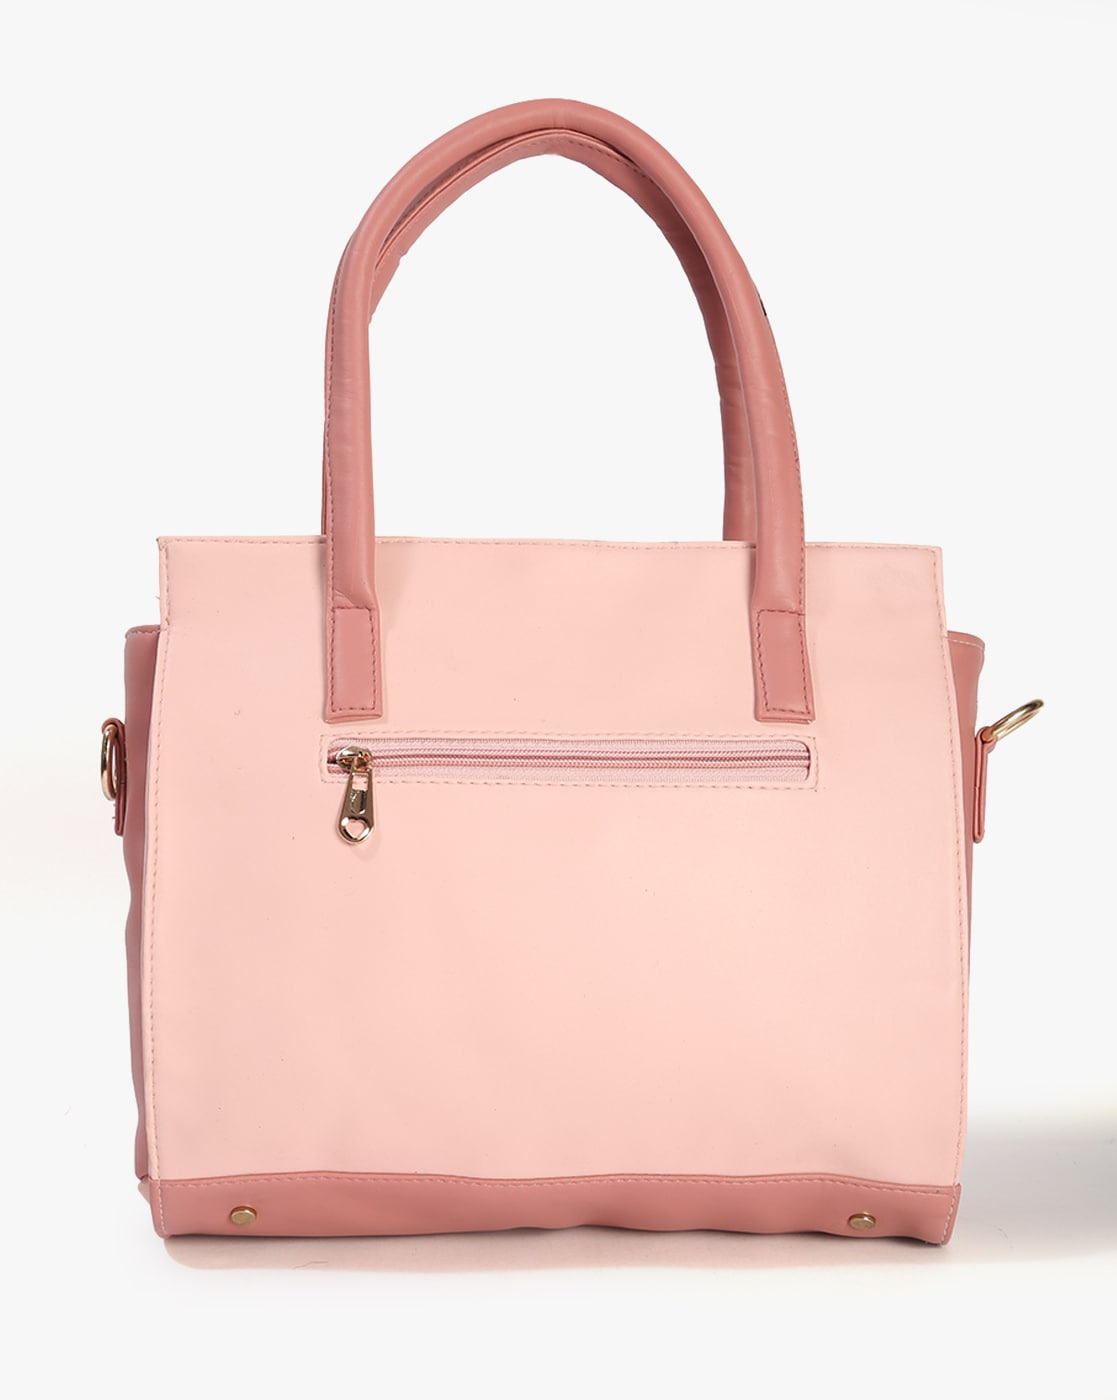 Buy MOCA women cross body bags Lotus Pink at Amazon.in